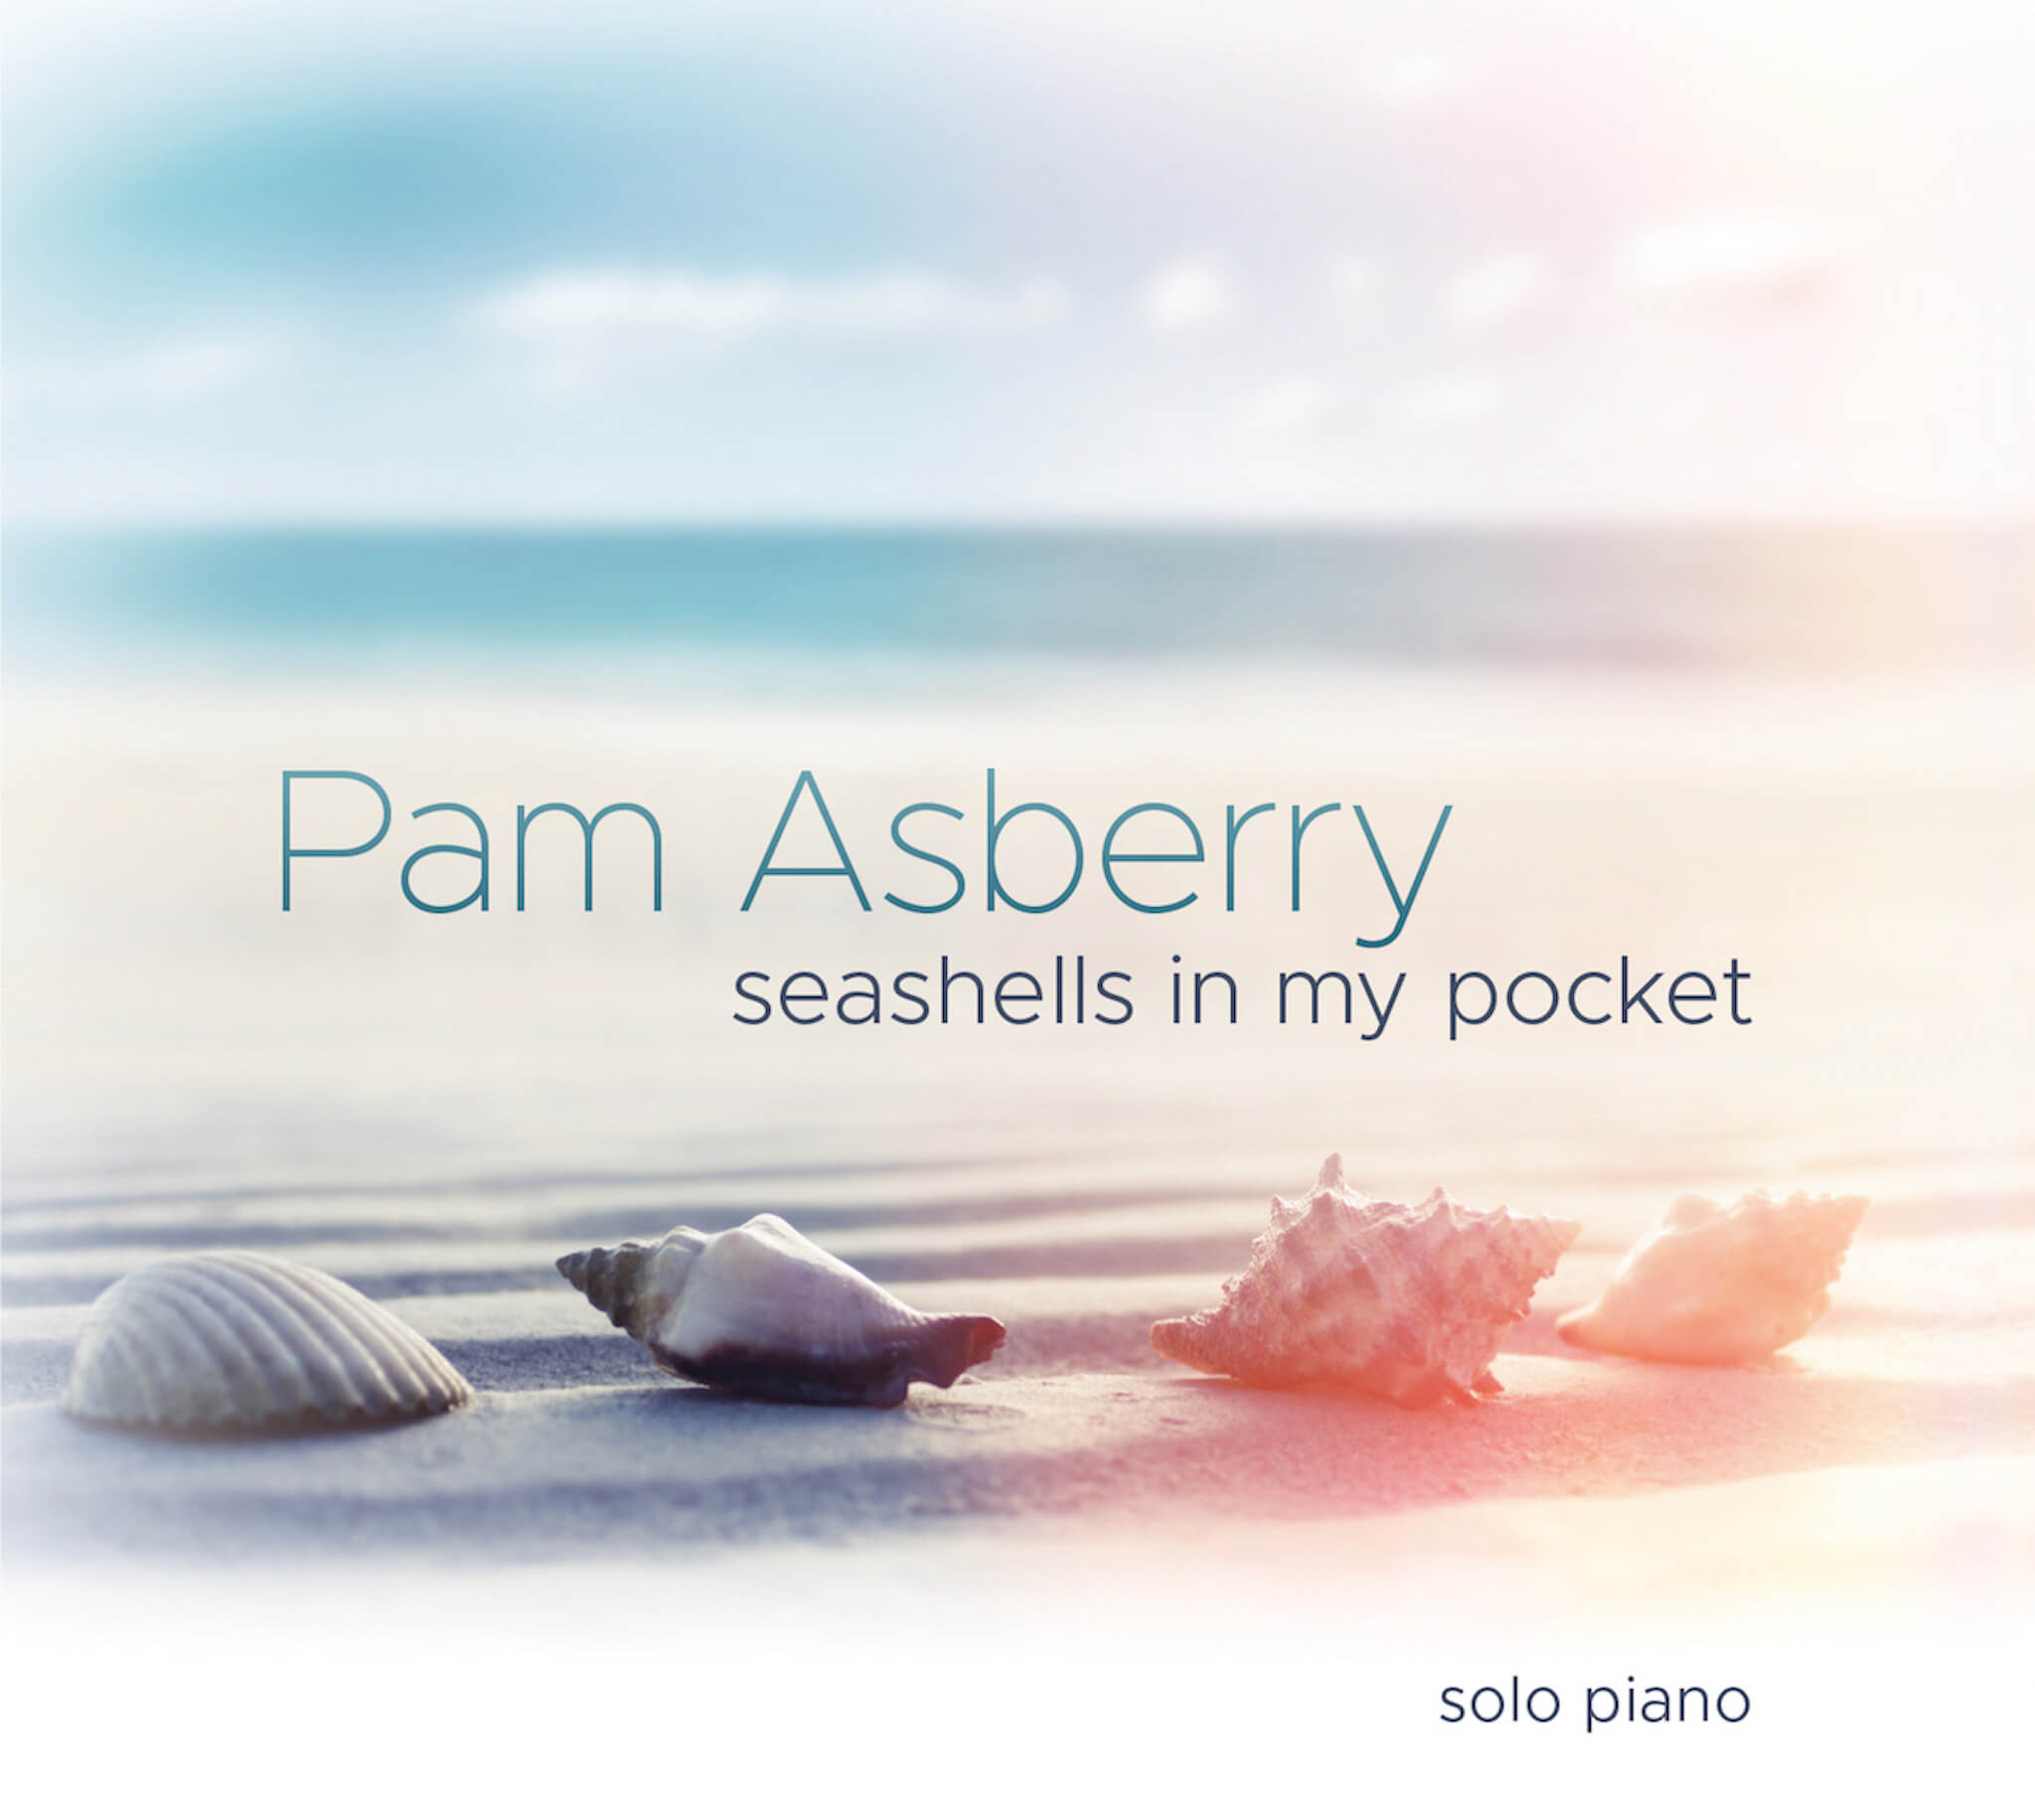 Pam Asberry creative magical piano memories